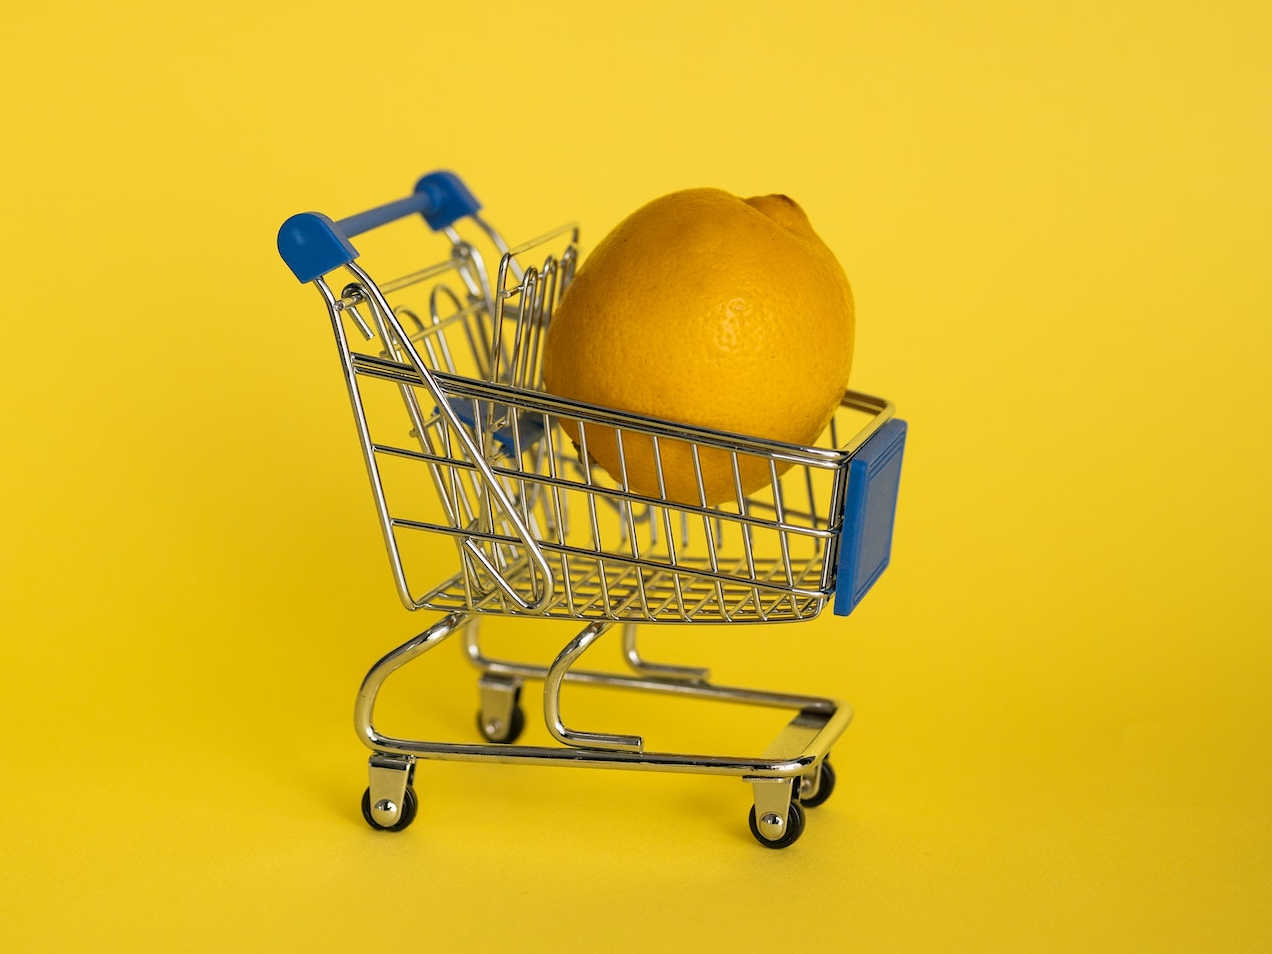 A lemon in a miniature shopping cart